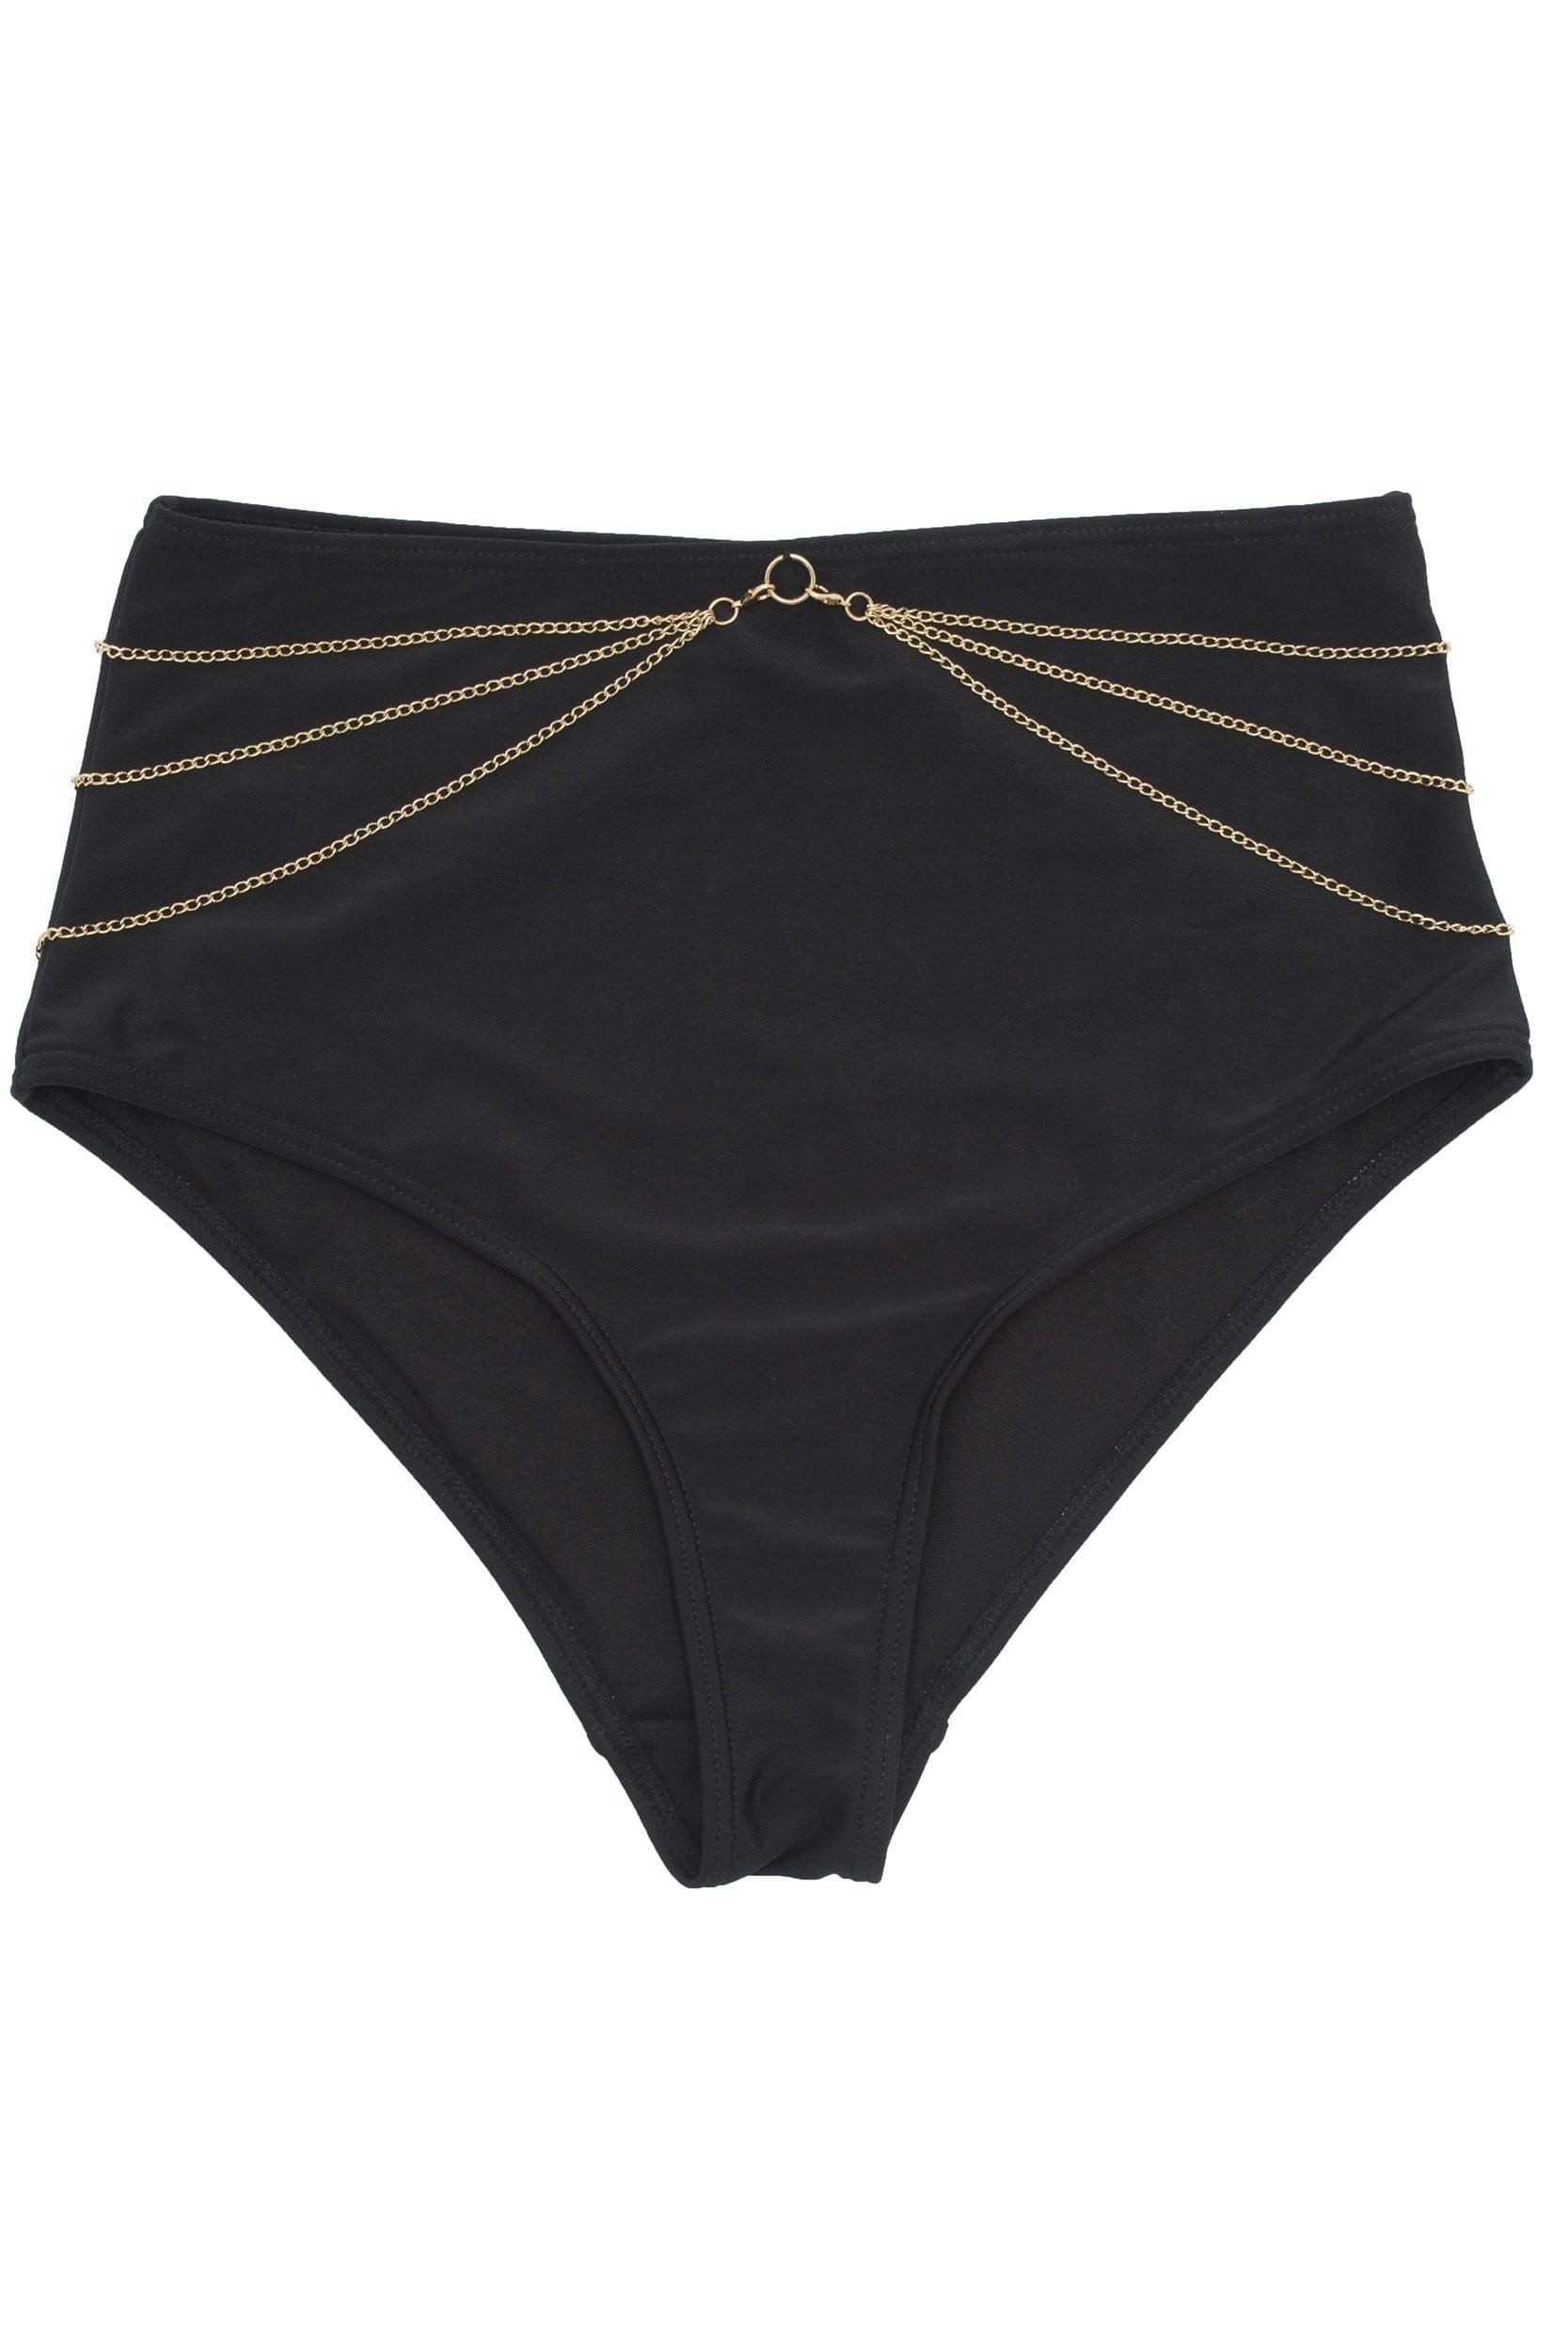 Goldie black high waist brief with removable chain